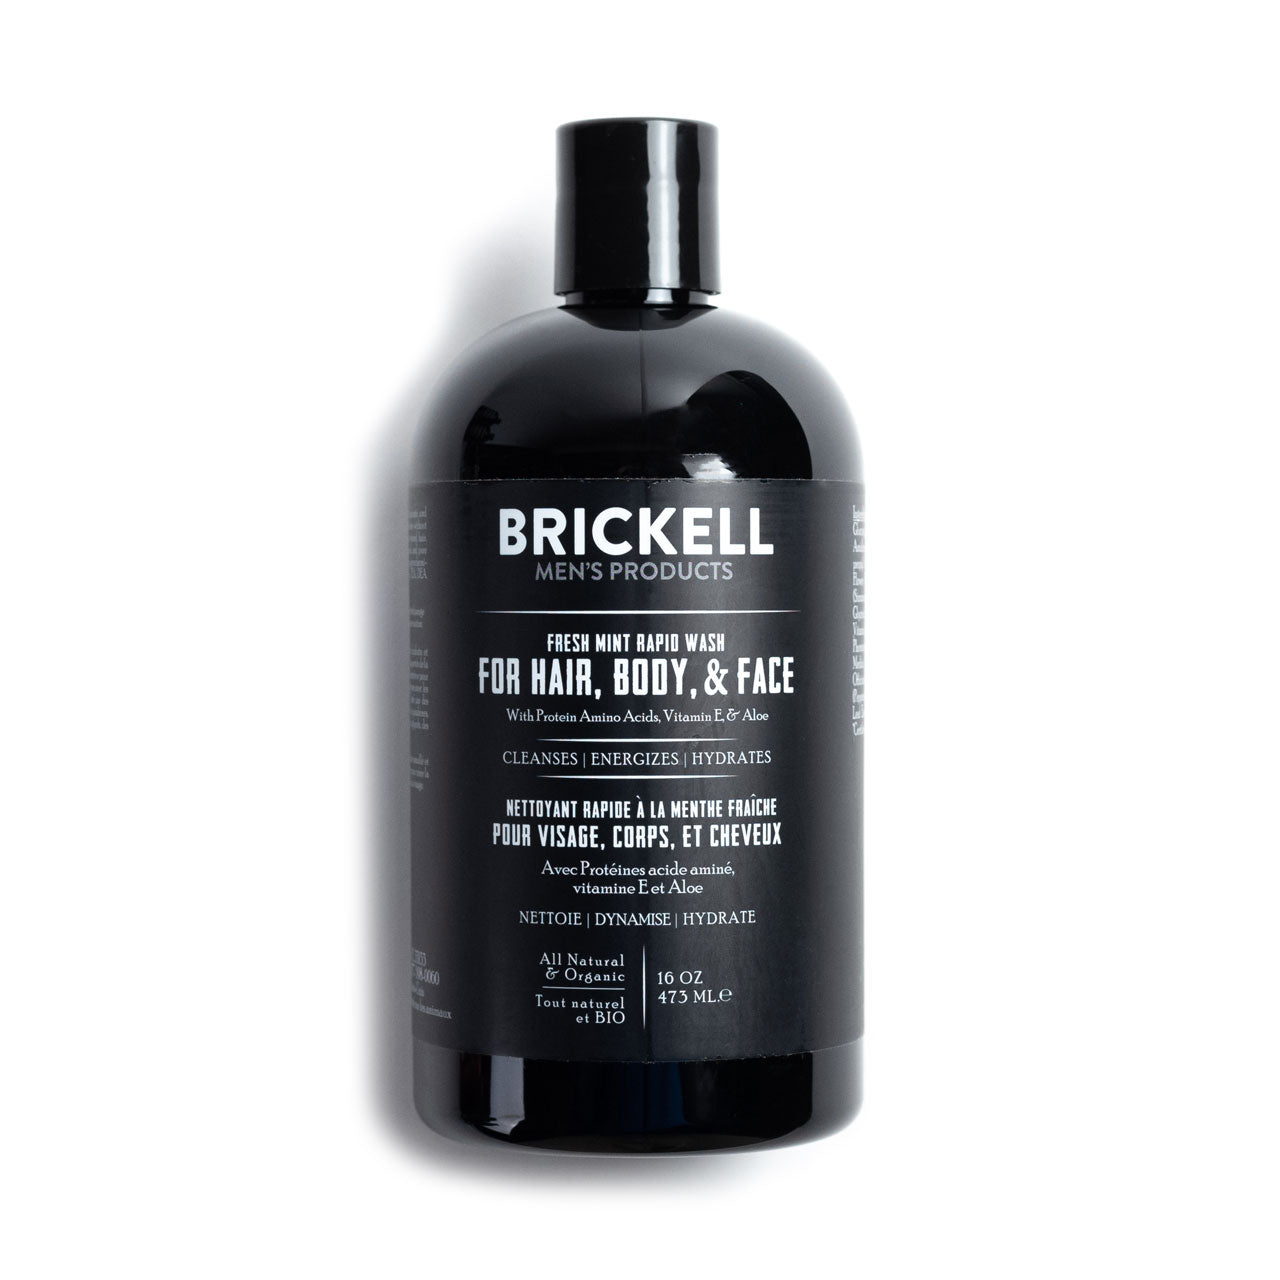 Brickell Rapid Wash